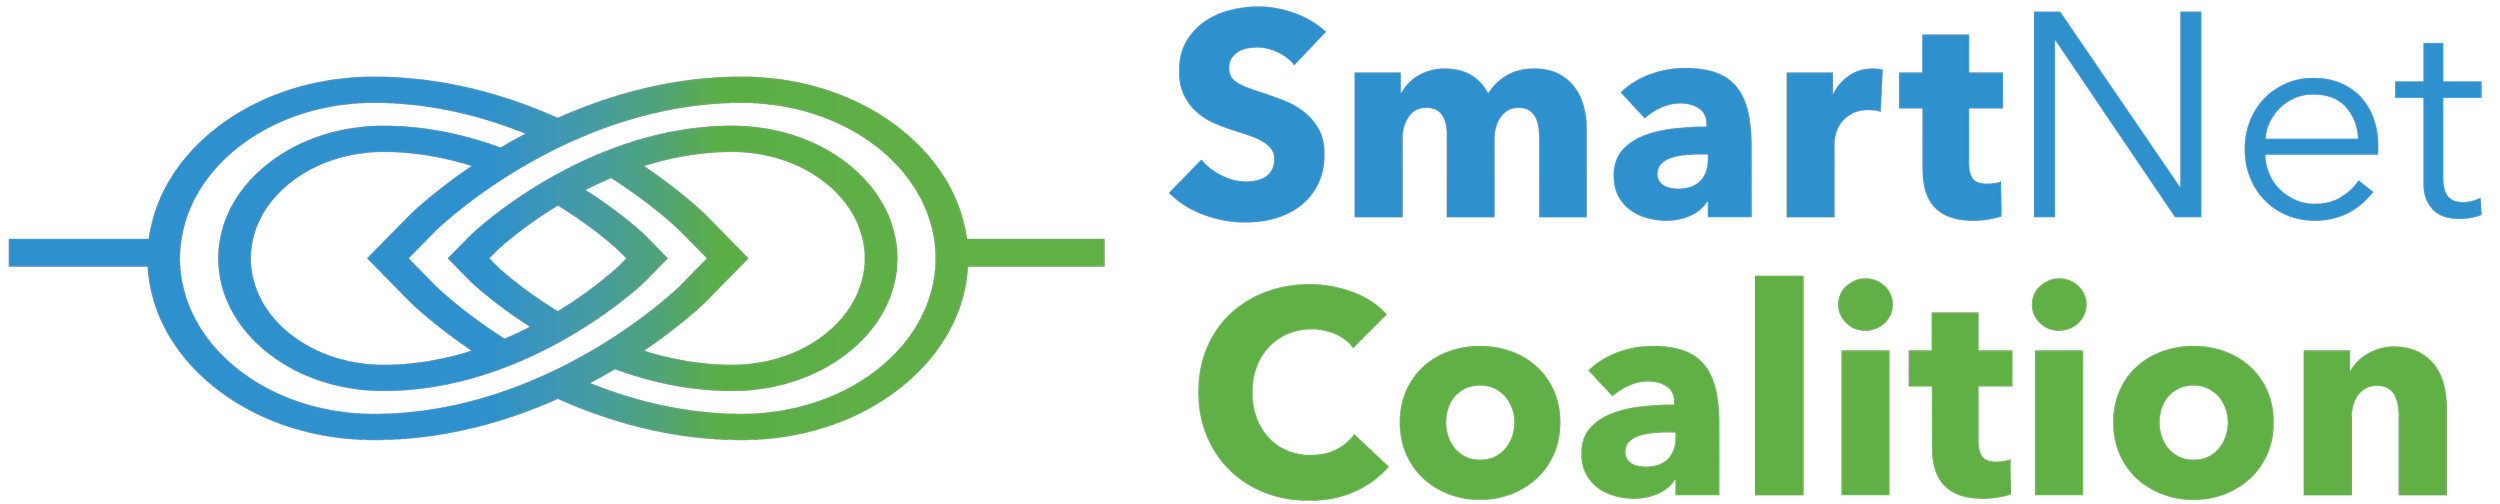 Smartnet Coalition